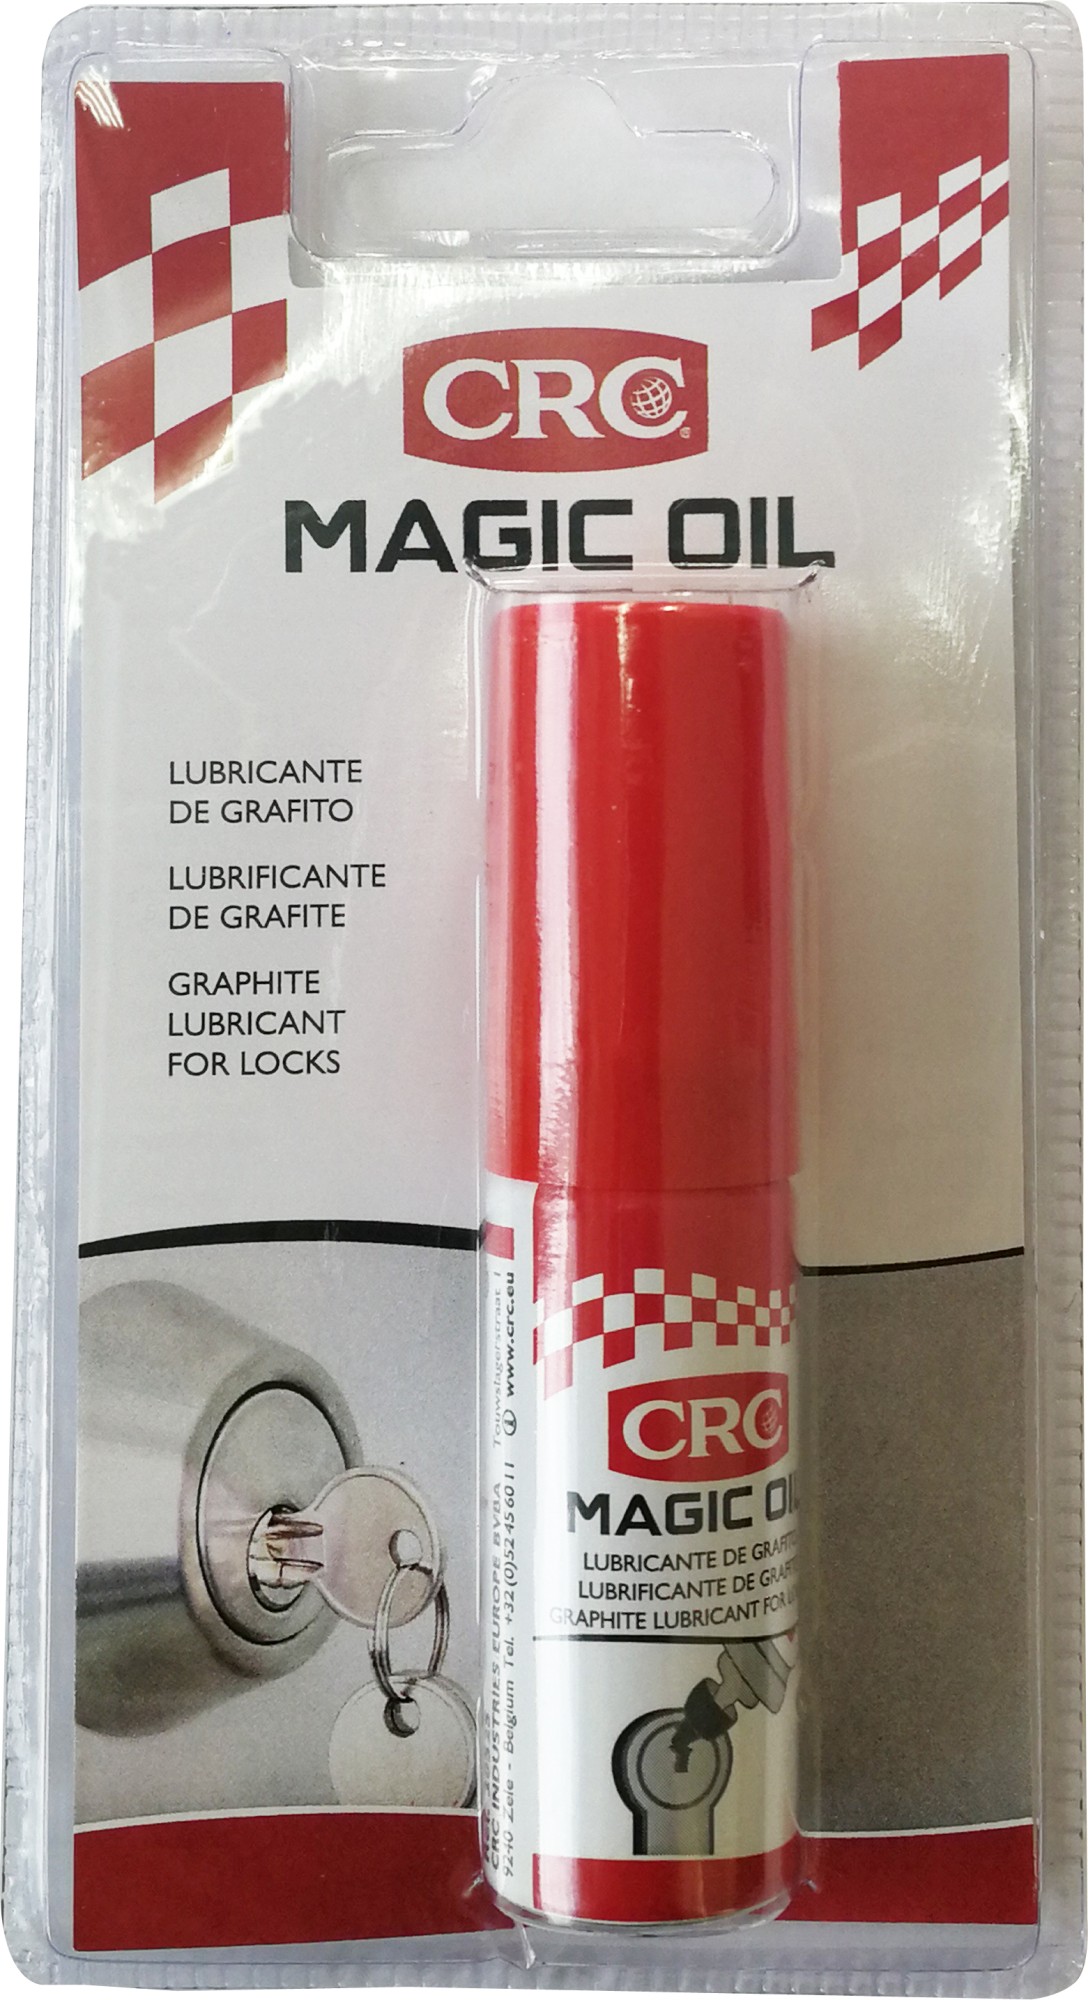 MAGIC OIL: Lubricante de grafito para cerraduras. Seco